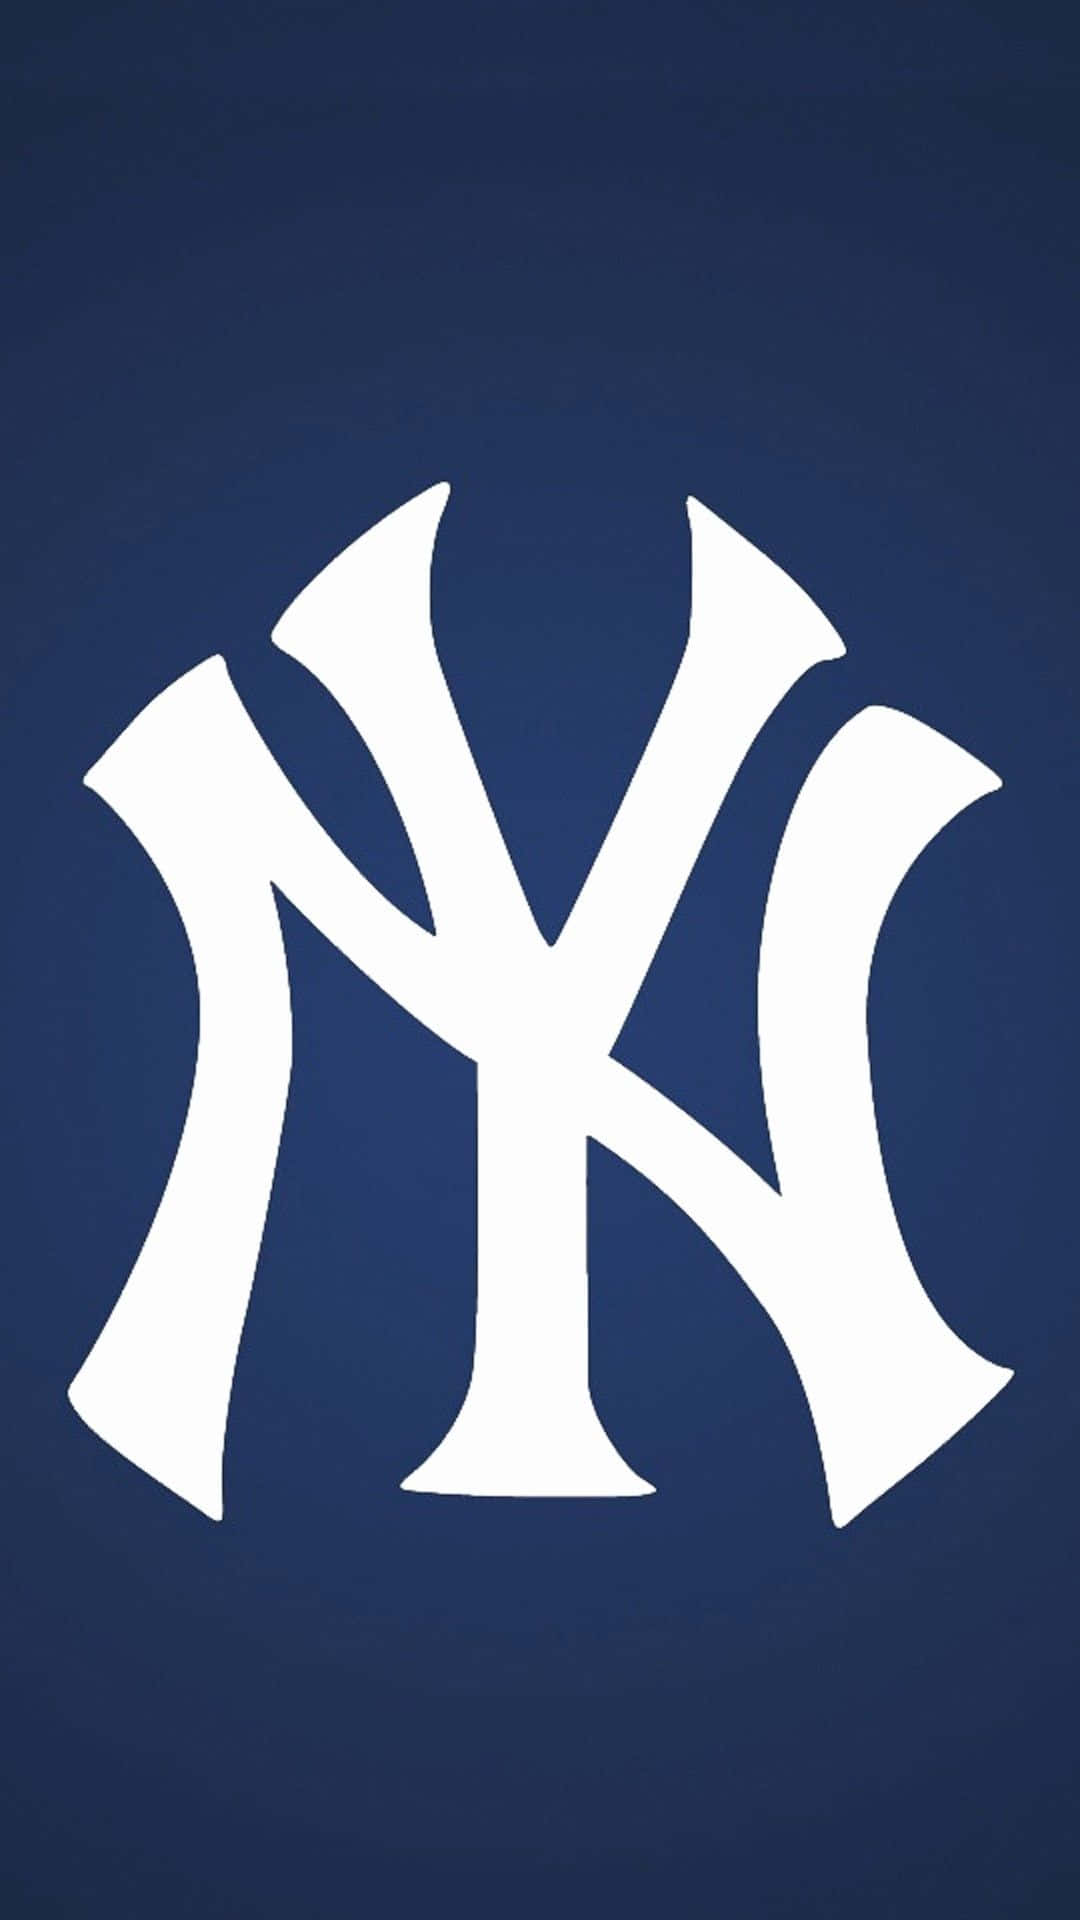 Repræsentér Din Yndlingsbaseballhold Med Et Yankees-tema Iphone Cover. Wallpaper